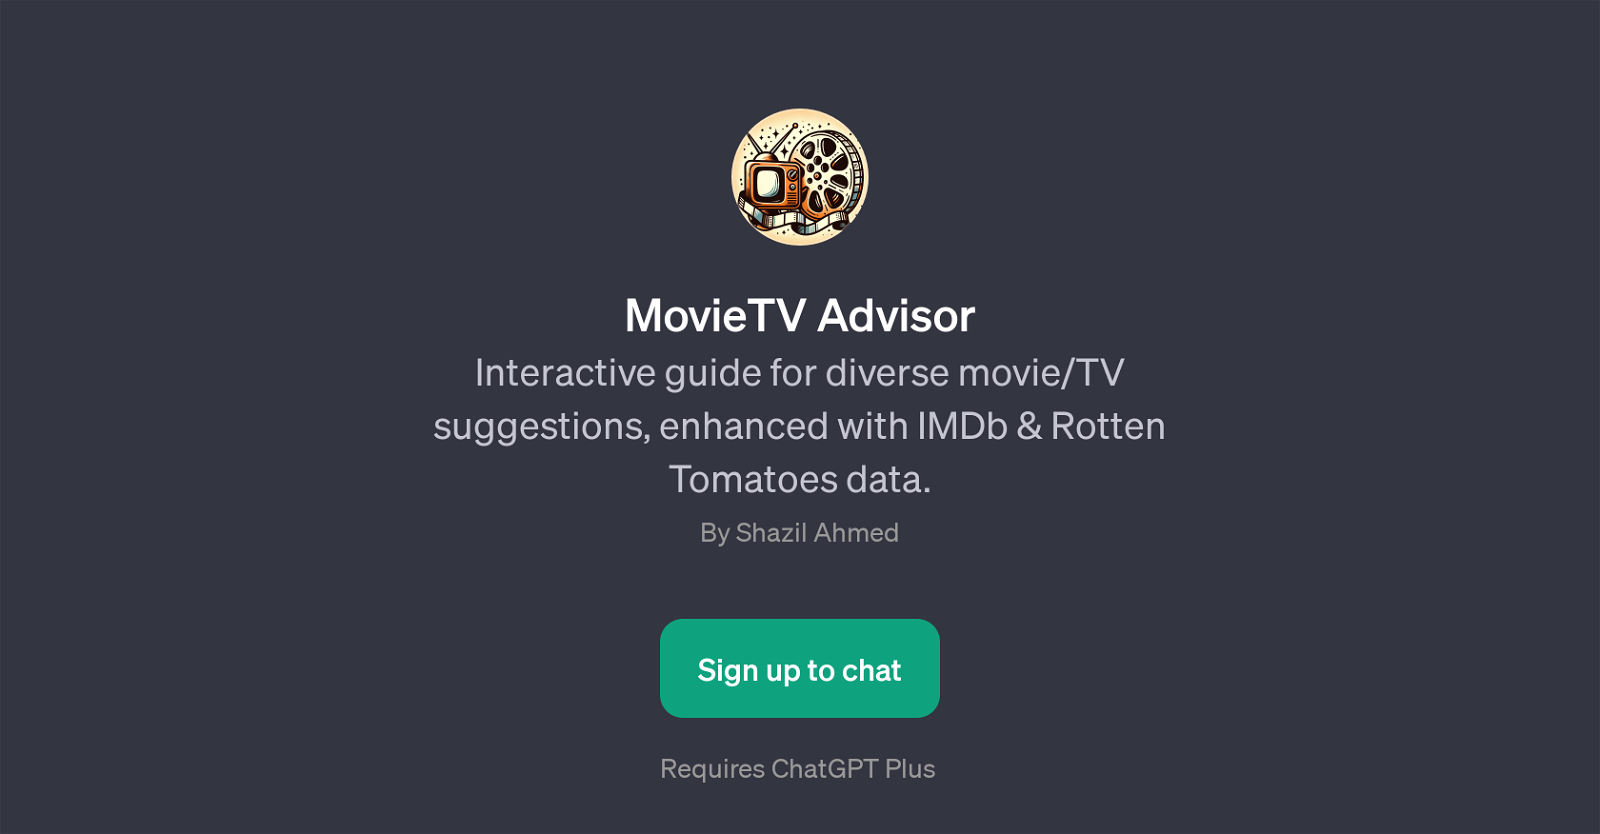 MovieTV Advisor website